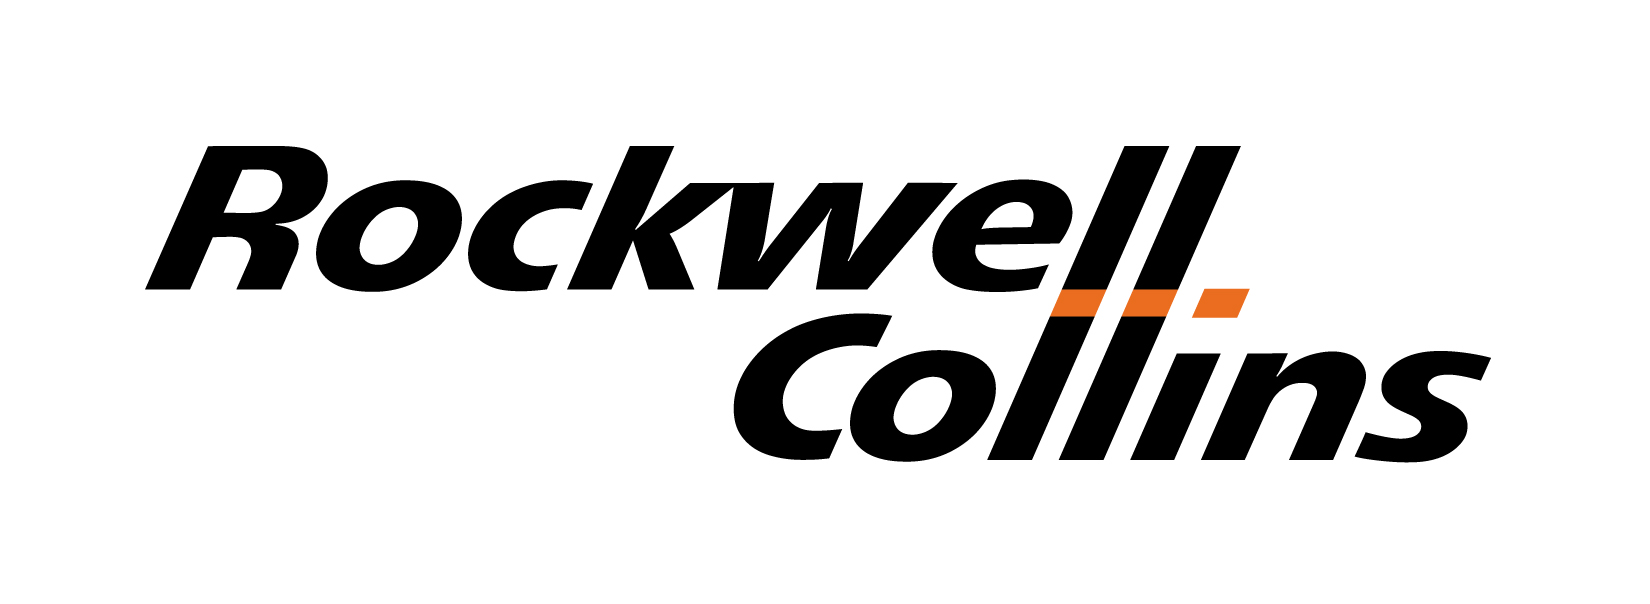 Rockwell Collins Canada - Aerospace Industries Association ...
